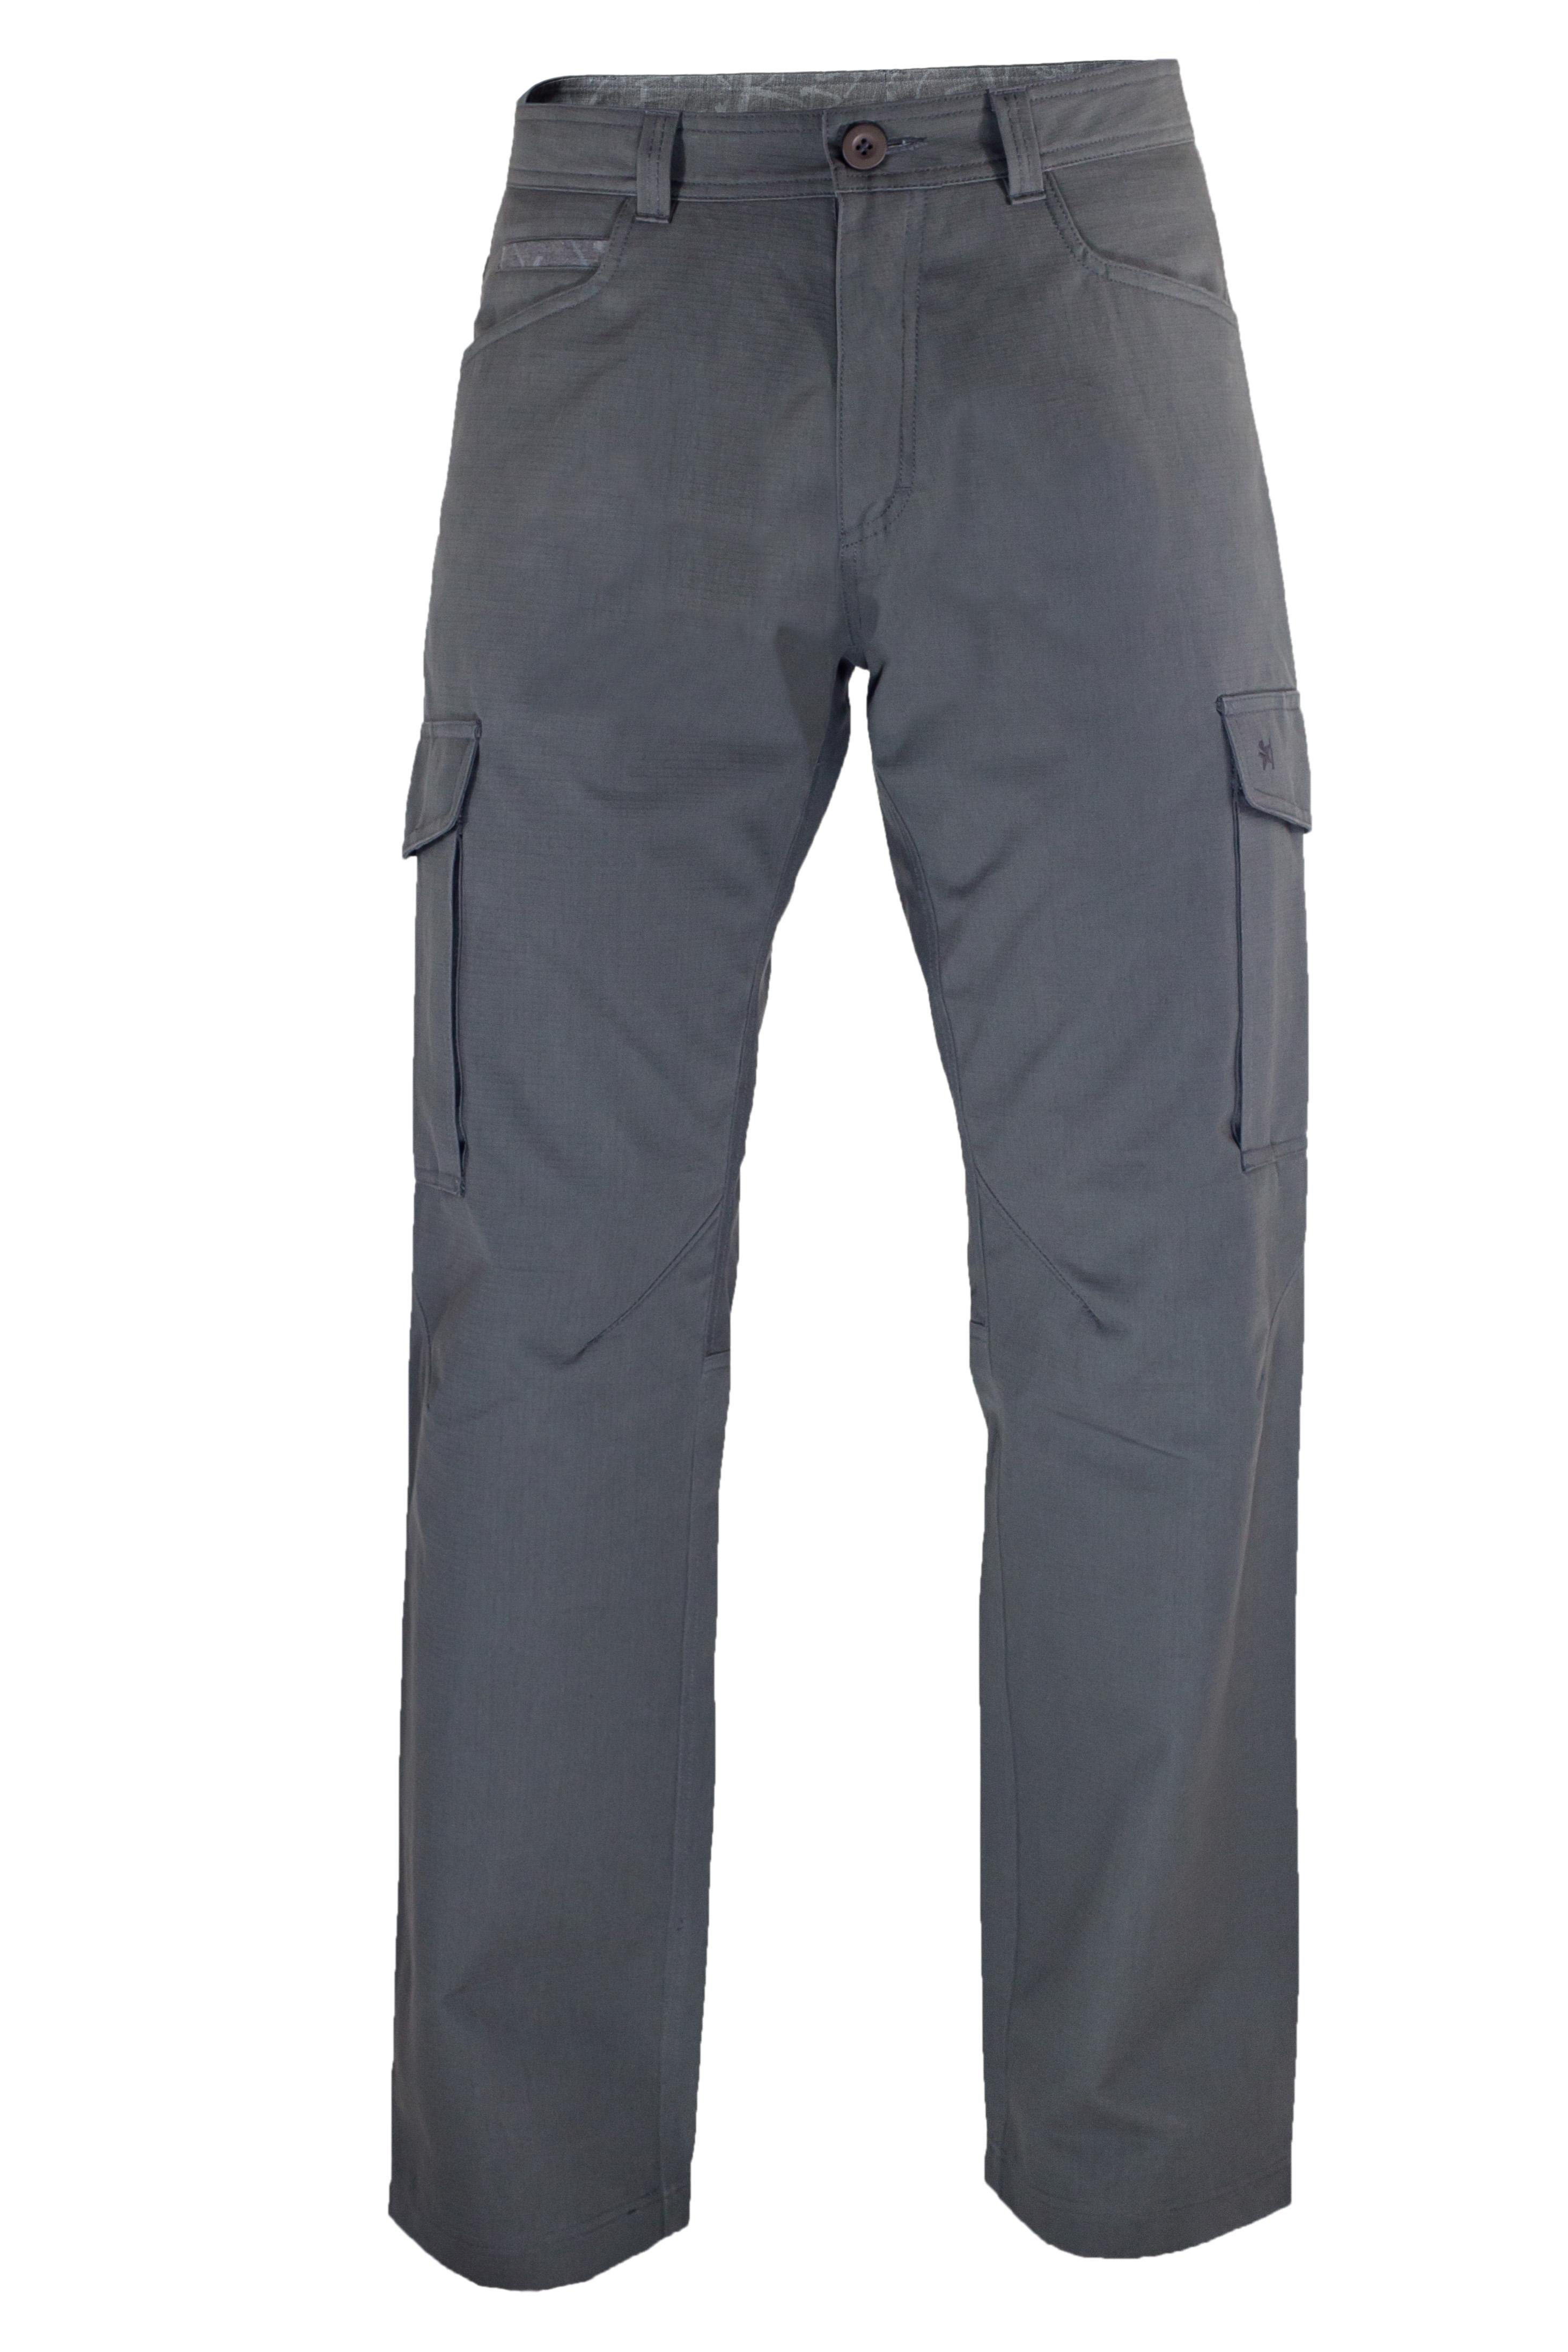 Warmpeace kalhoty Travers Barva: šedá, Velikost: M